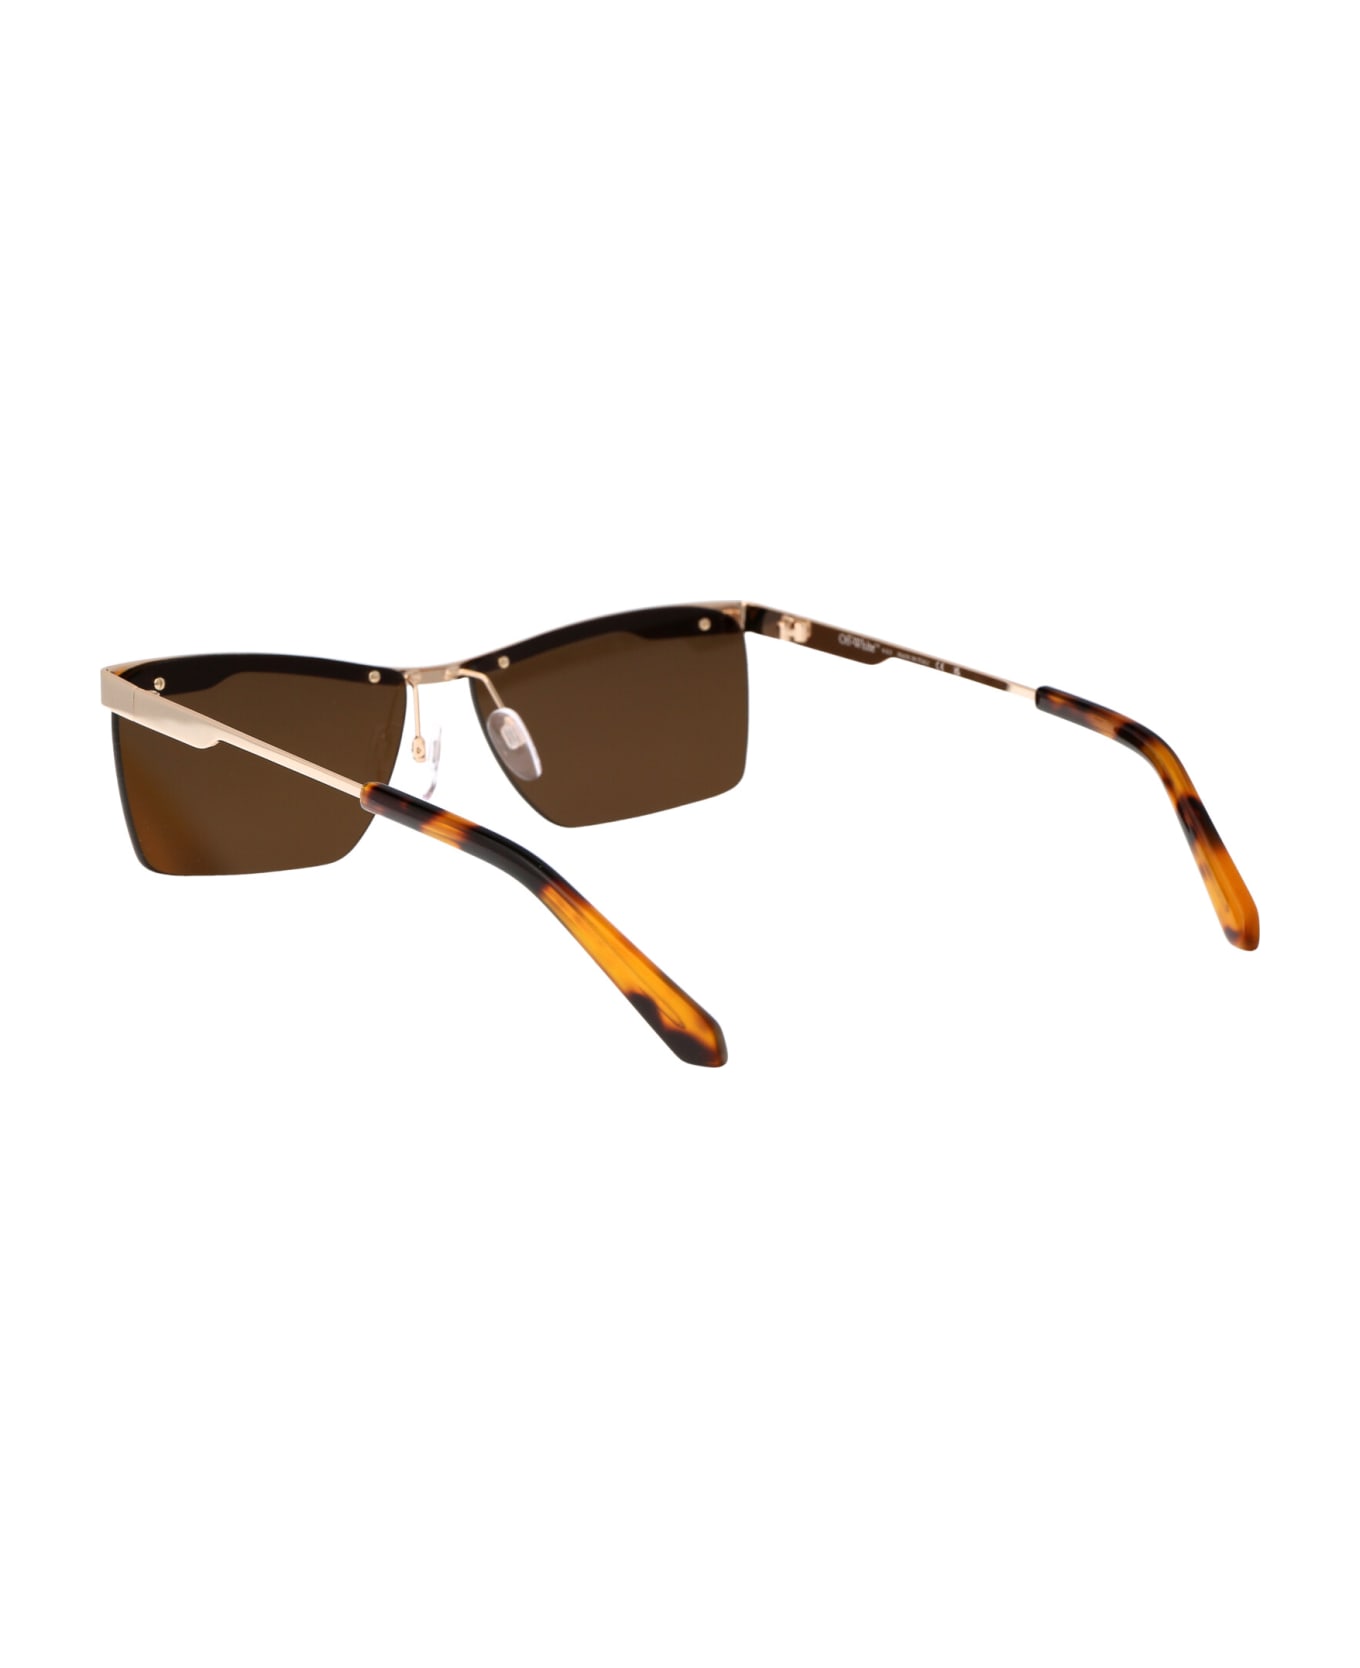 Off-White Rimini Sunglasses - 7676 GOLD サングラス